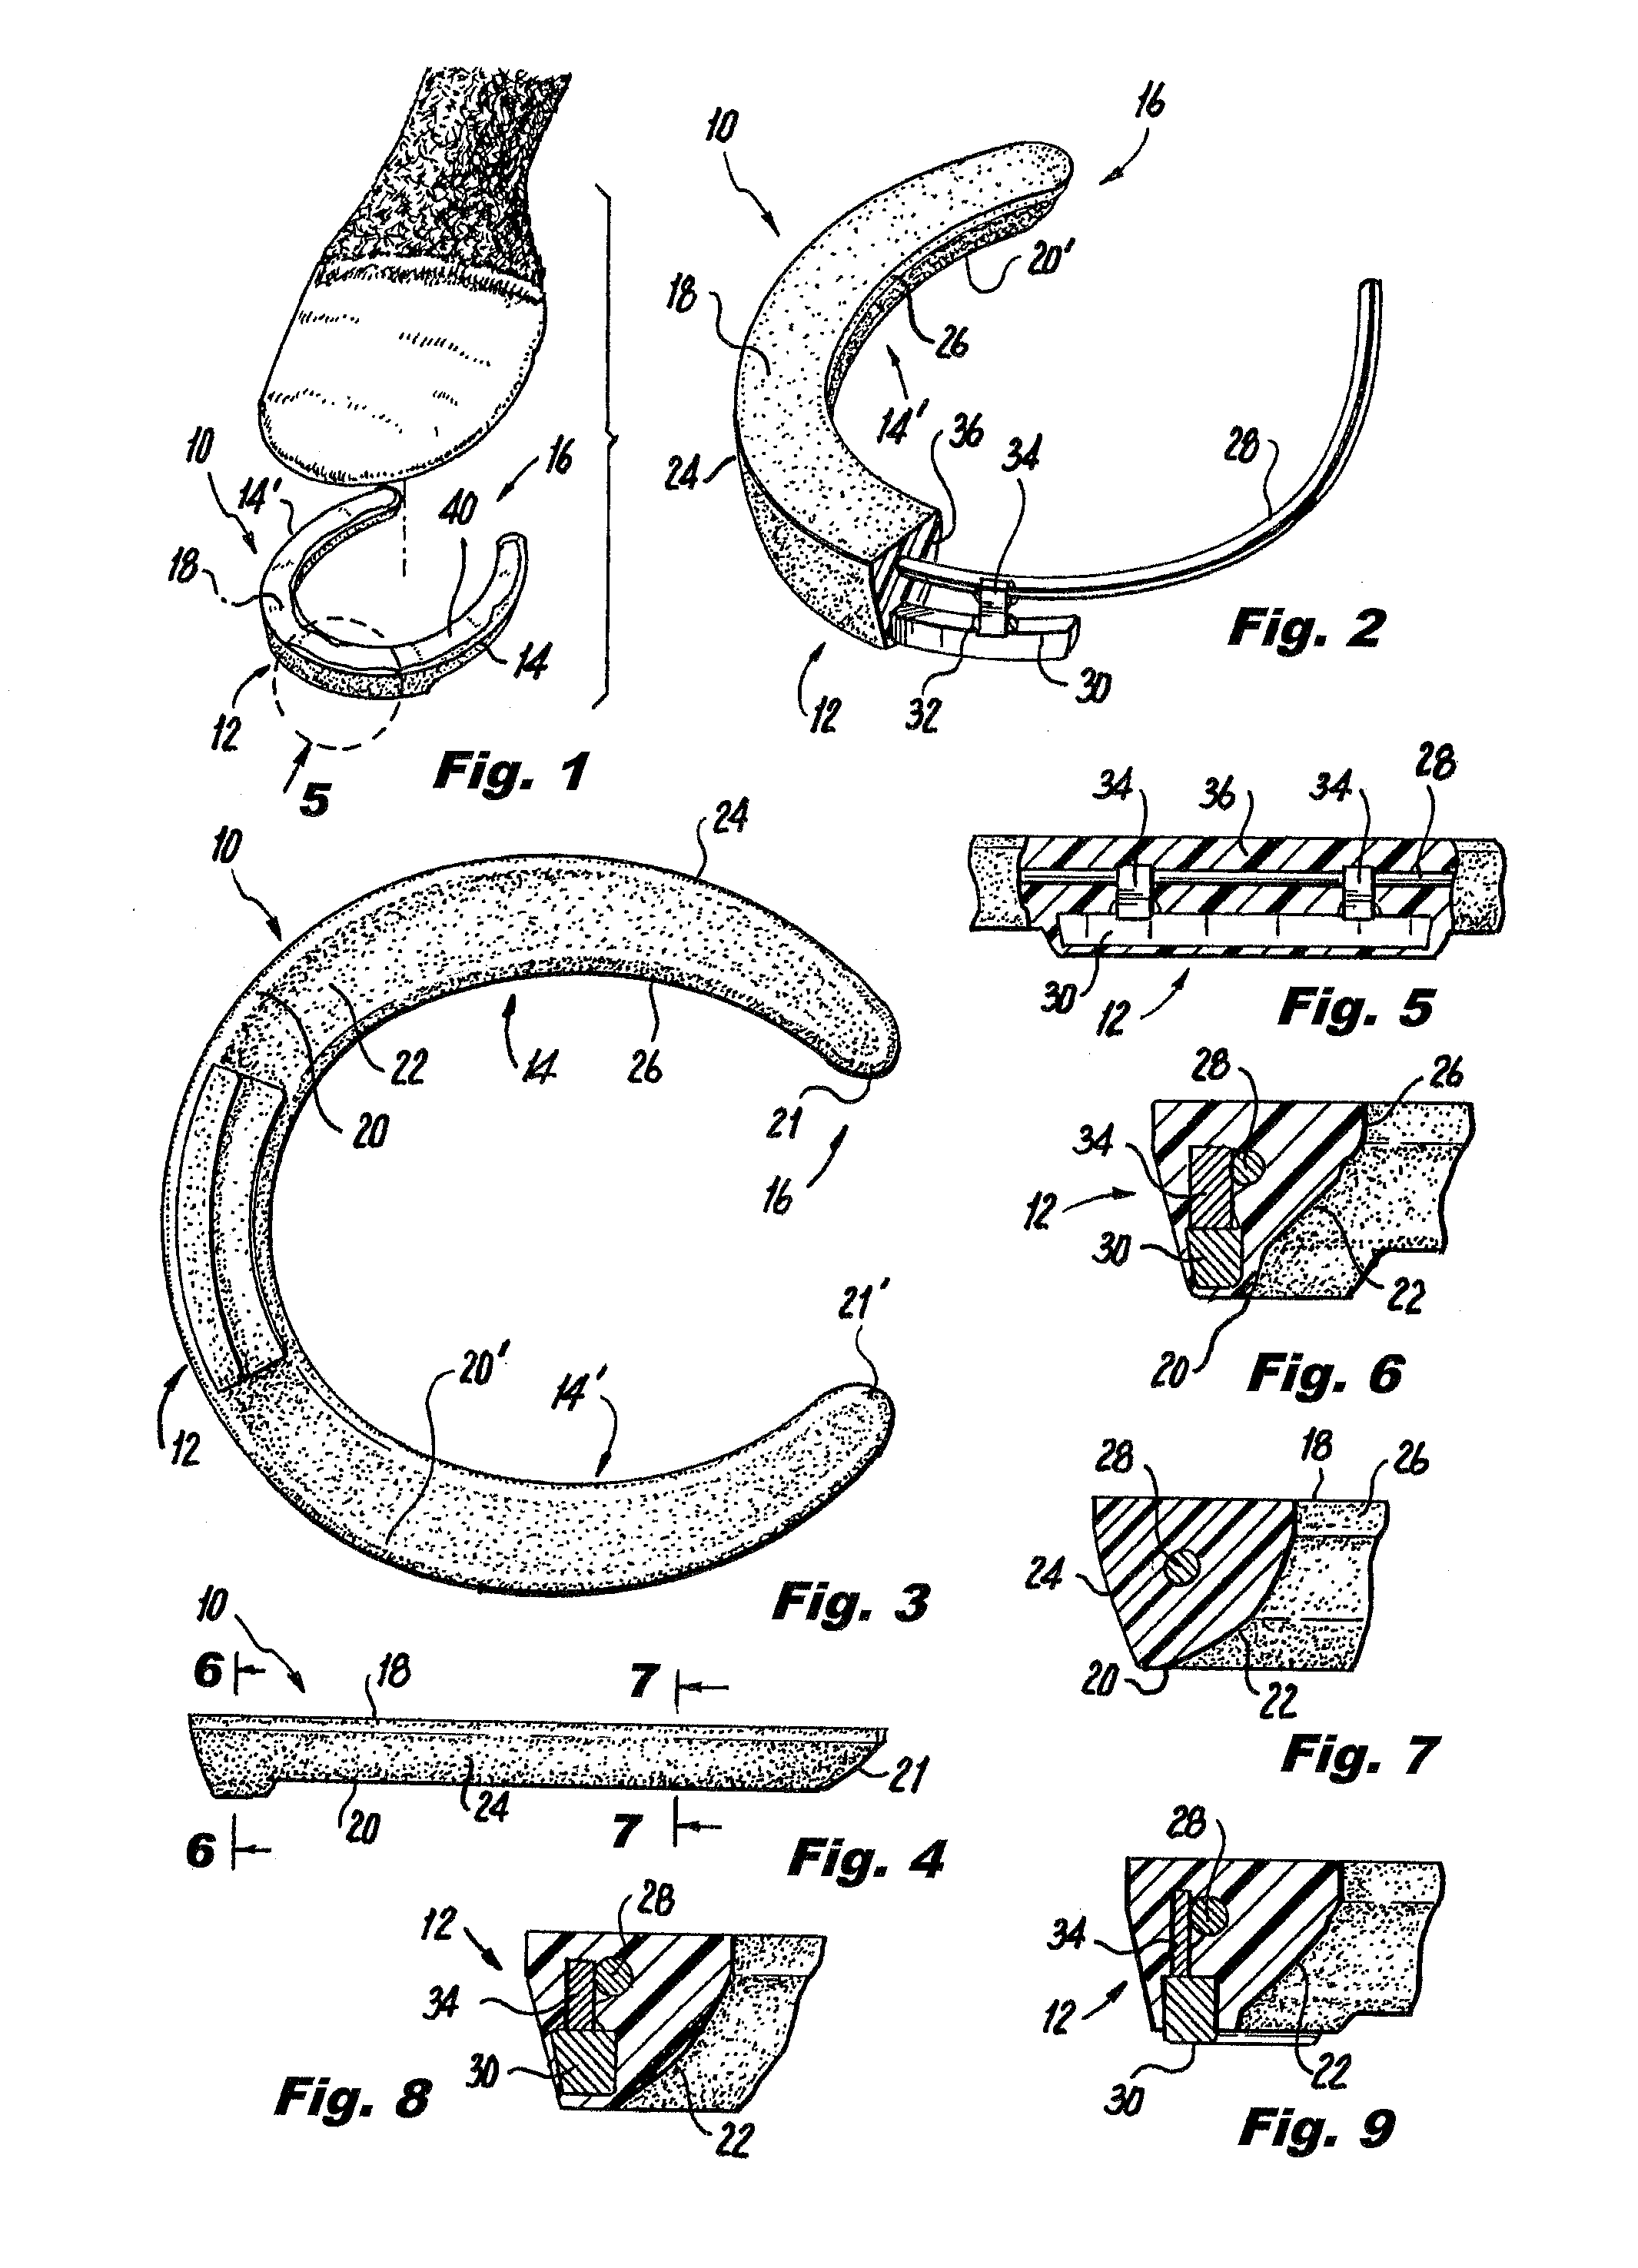 Reinforced polymer cuff horseshoe